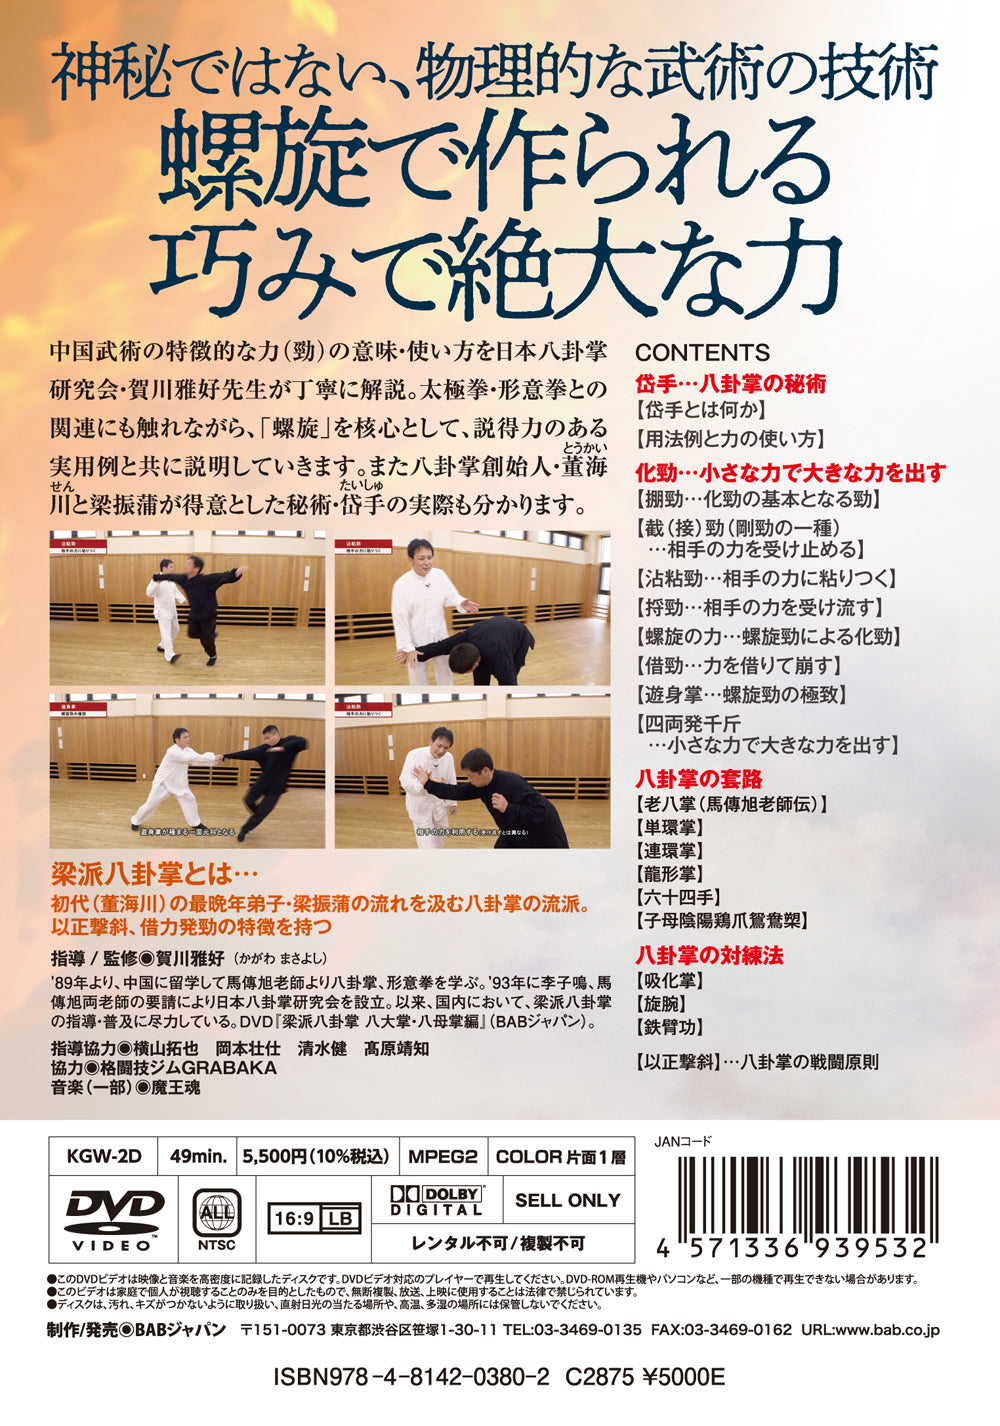 Liang Style Baguazhang Vol 2 DVD by Masayoshi Kagawa - Budovideos Inc